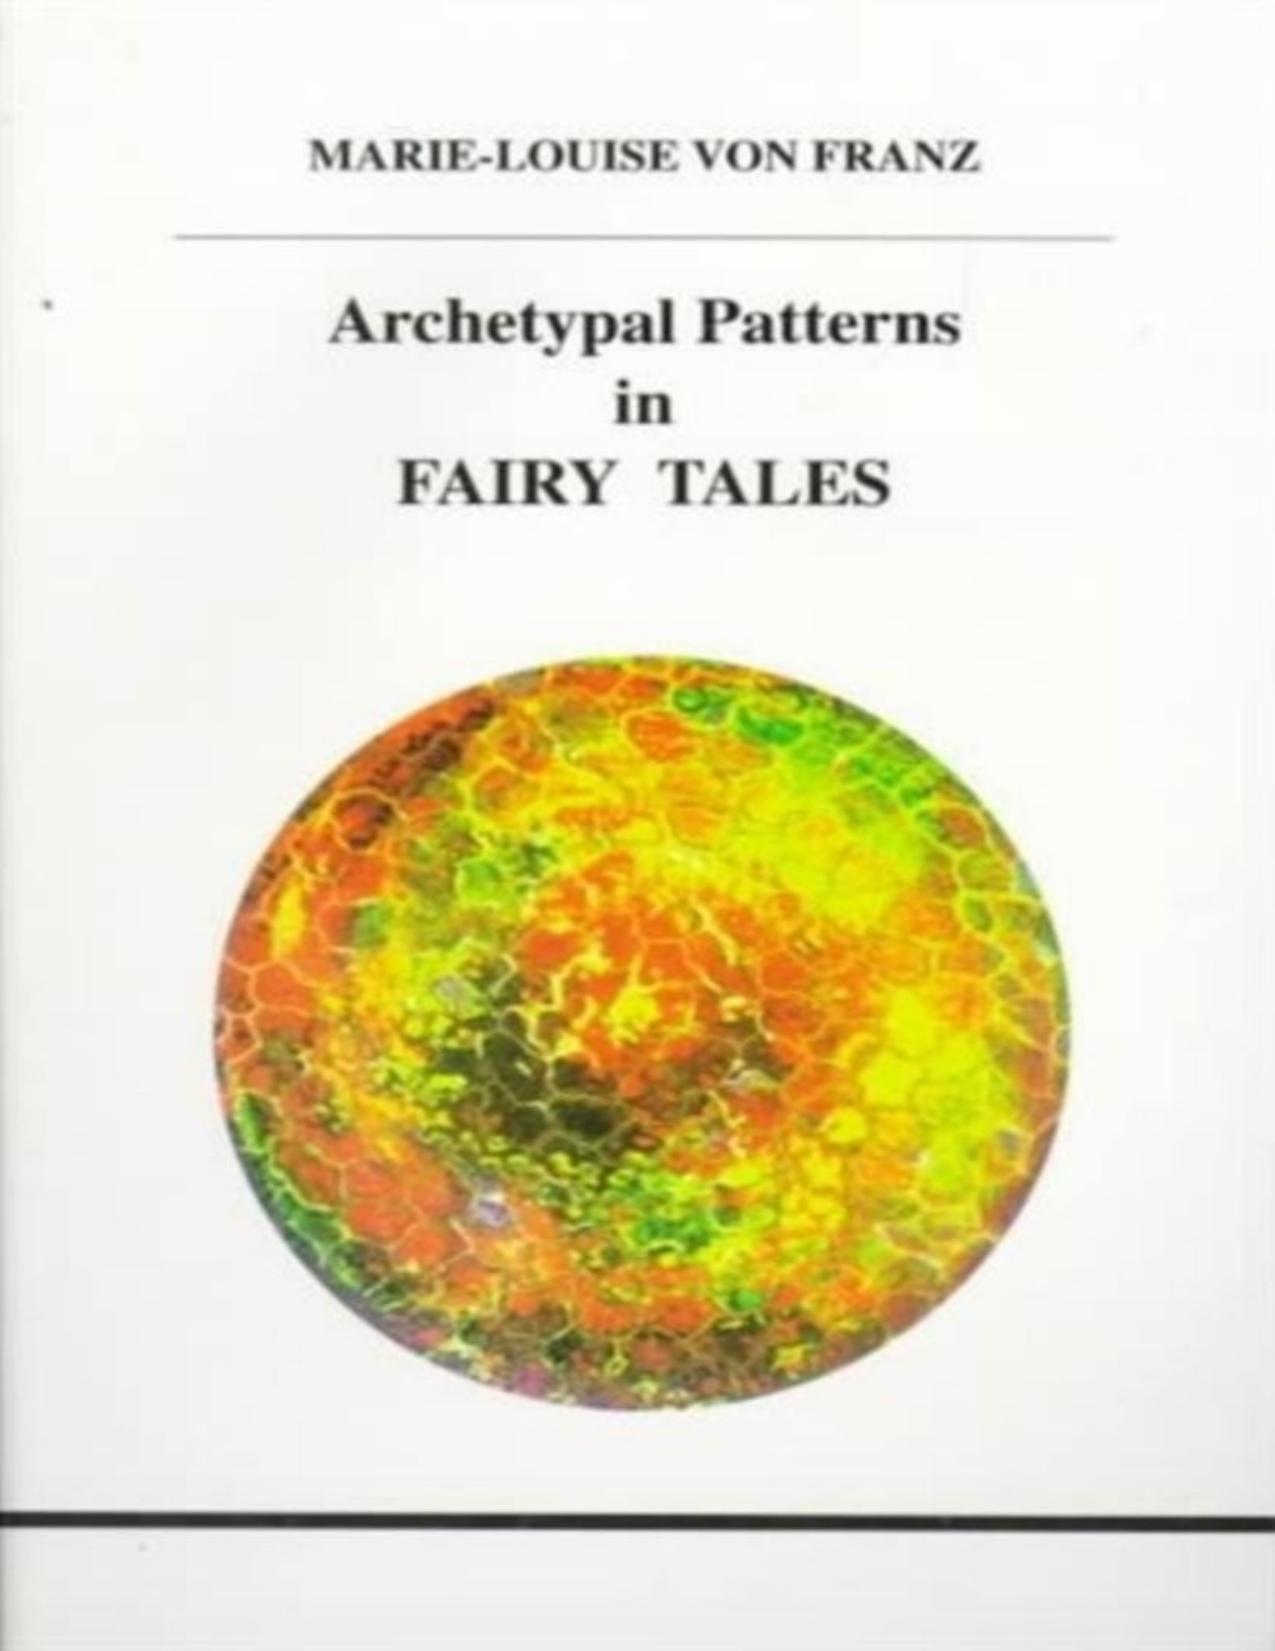 Archetypal Patterns in Fairy Tales by Marie-Louise von Franz